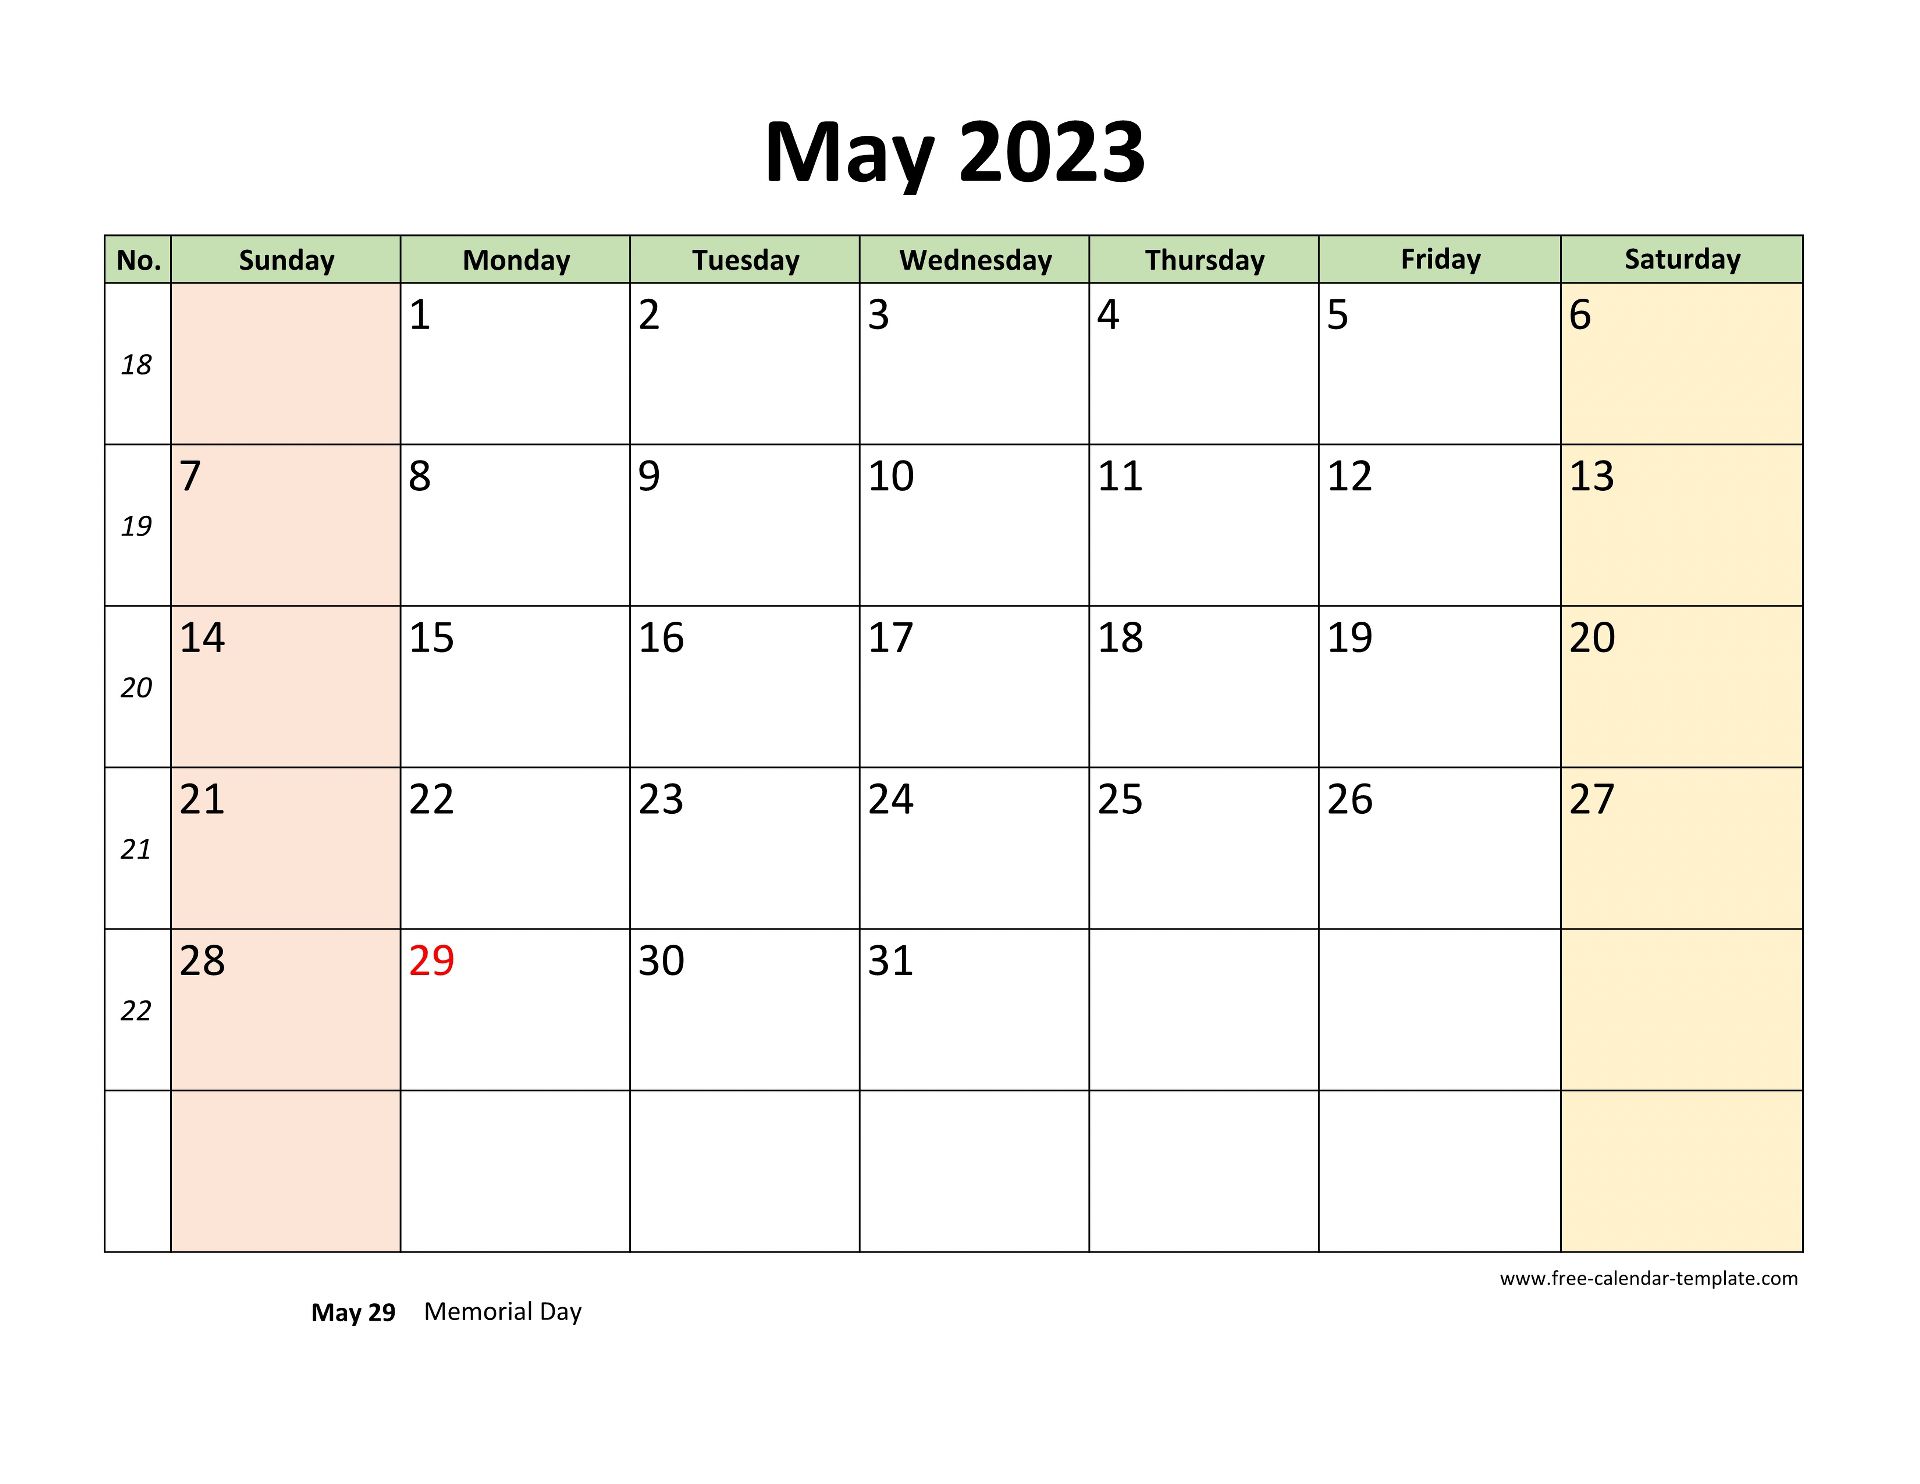 qldo-may-2023-calendar-printable-park-mainbrainly